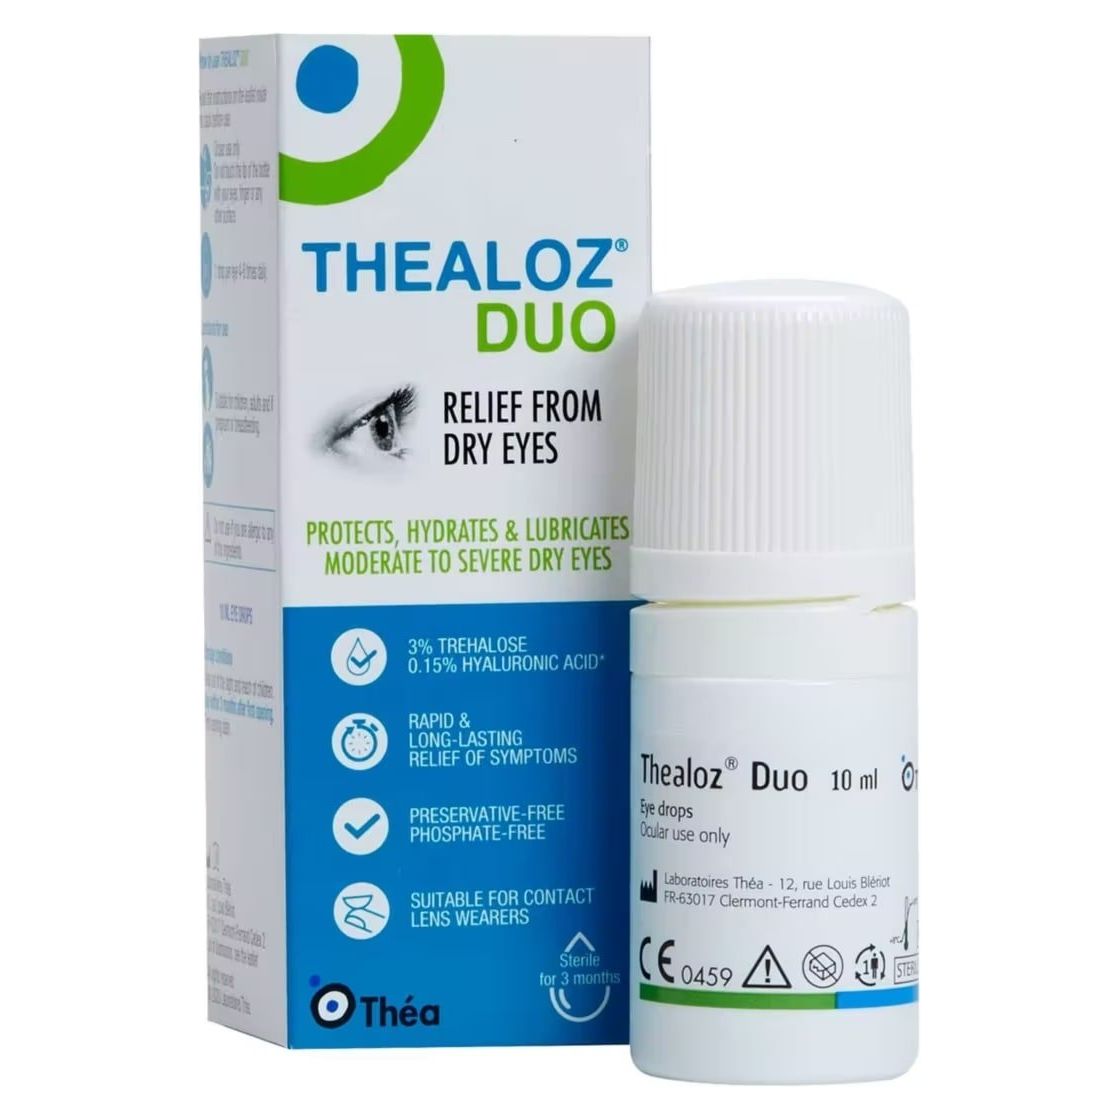 Thealoz Duo Dry Eye Drops three pack, 3 x 10ml